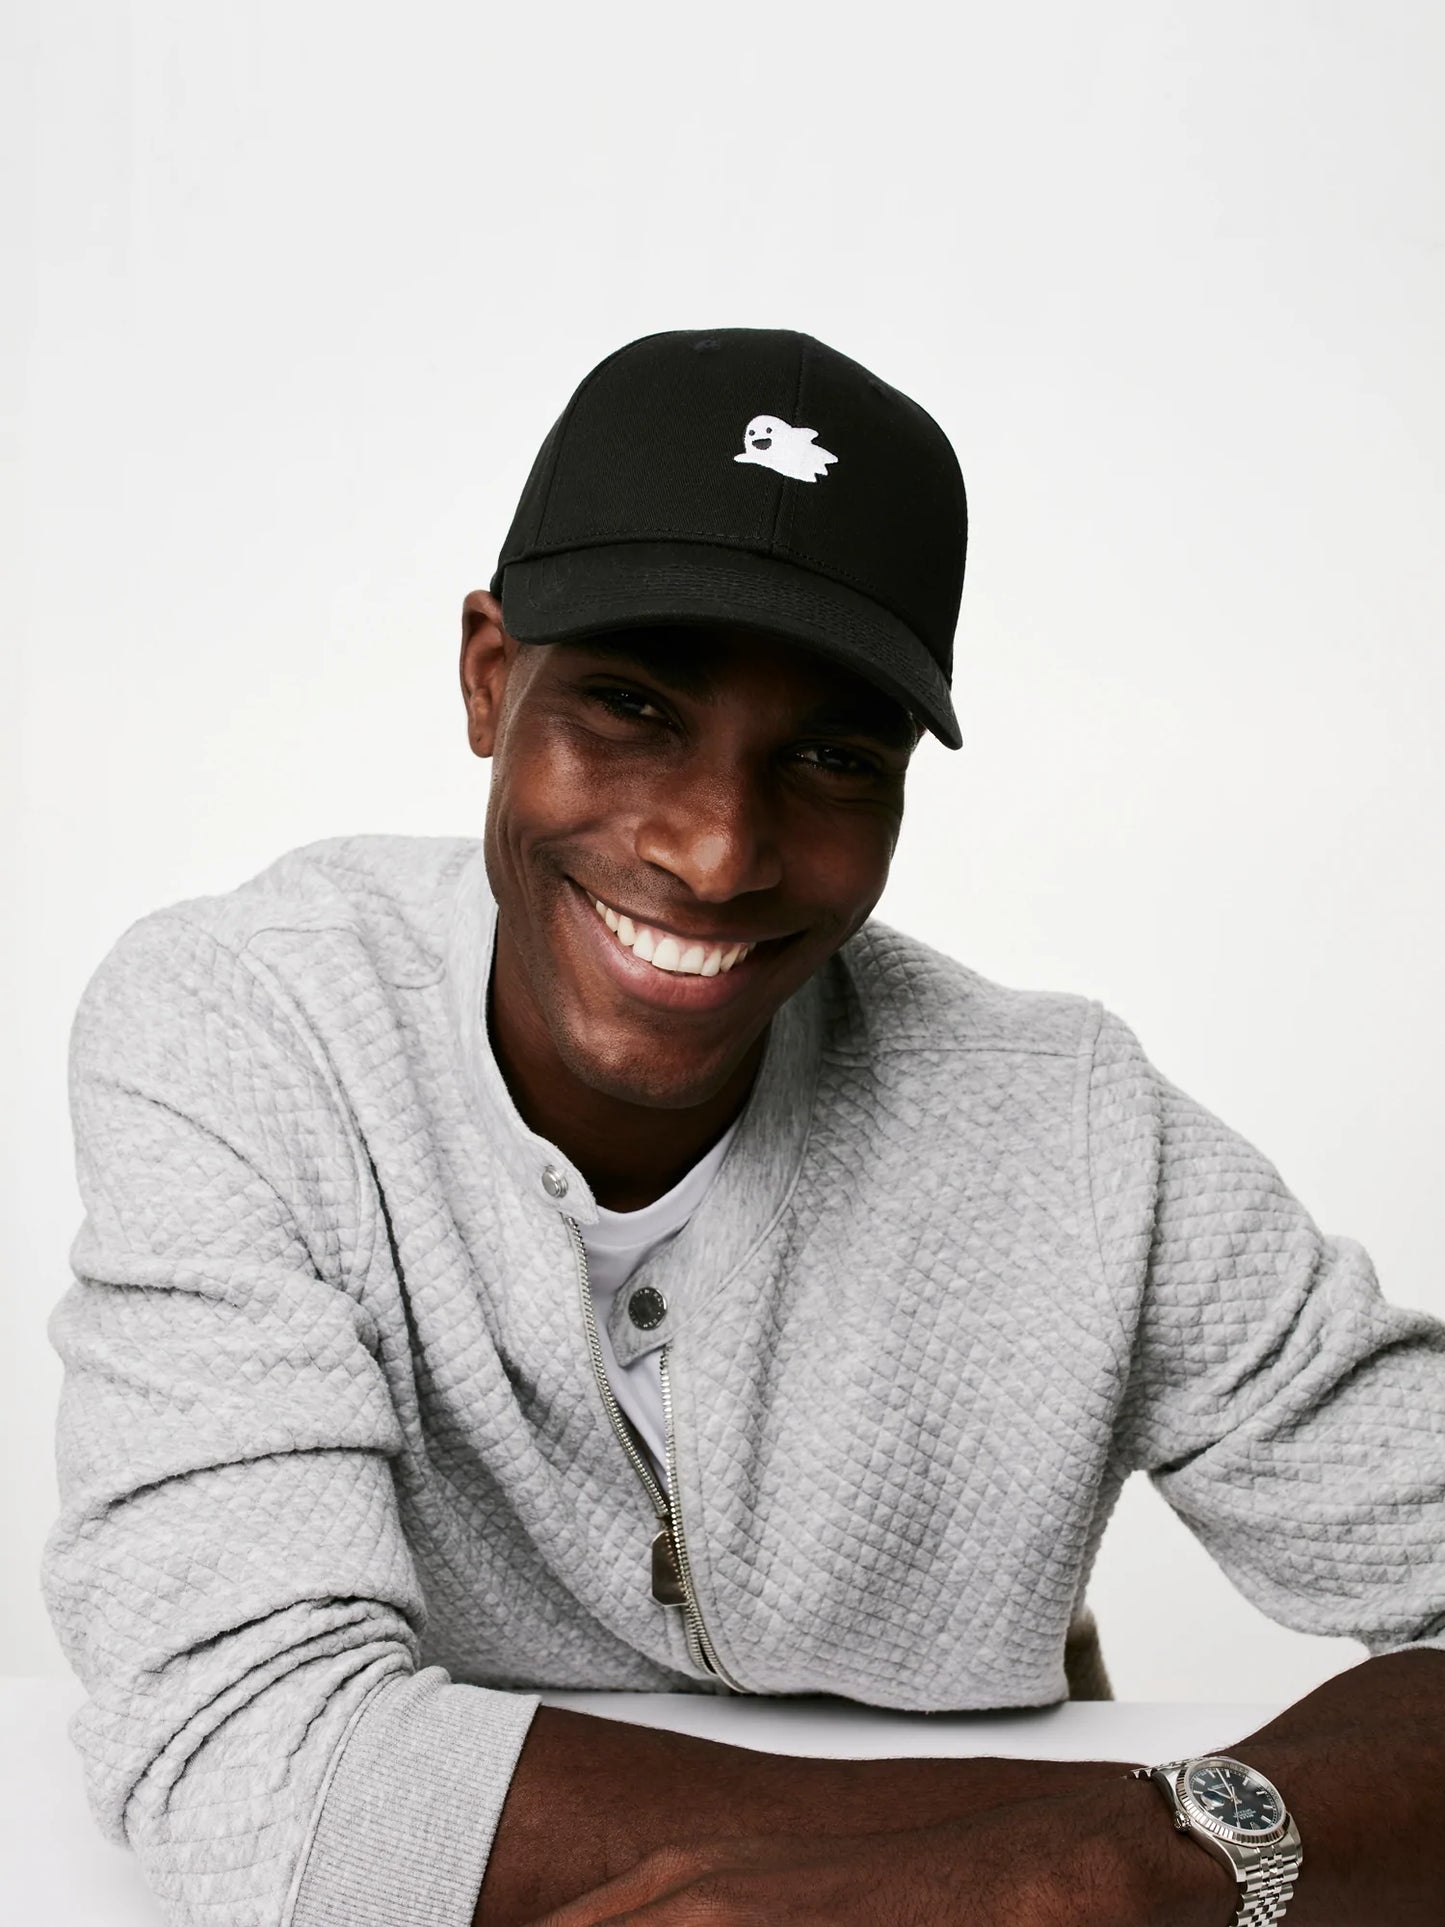 MOOD male model wearing Flying Ghost baseball cap in black color